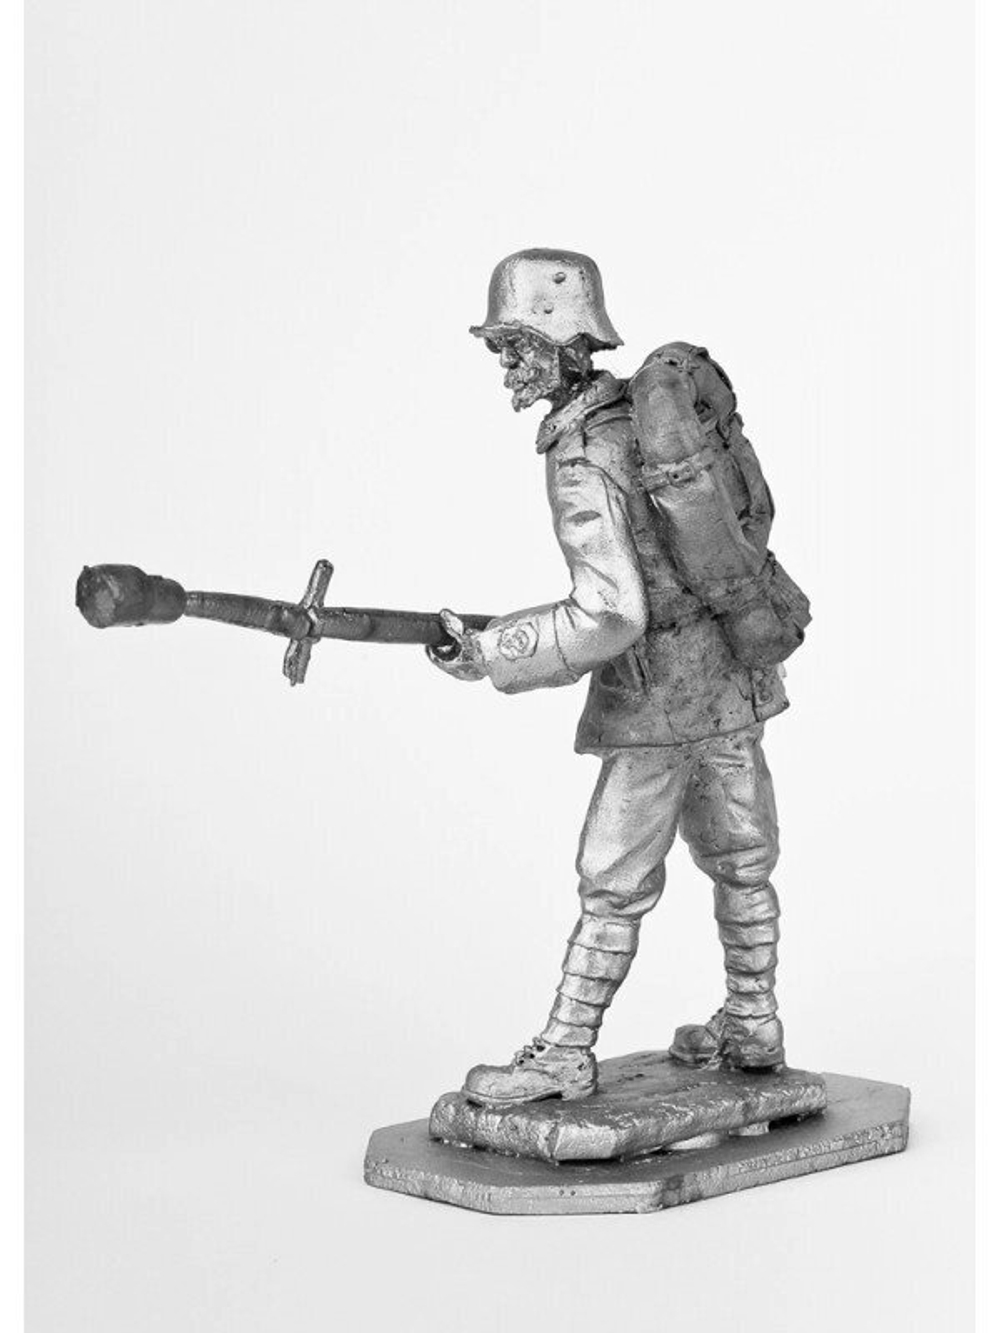 Оловянный солдатик Немецкий огнеметчик, 1916 г.